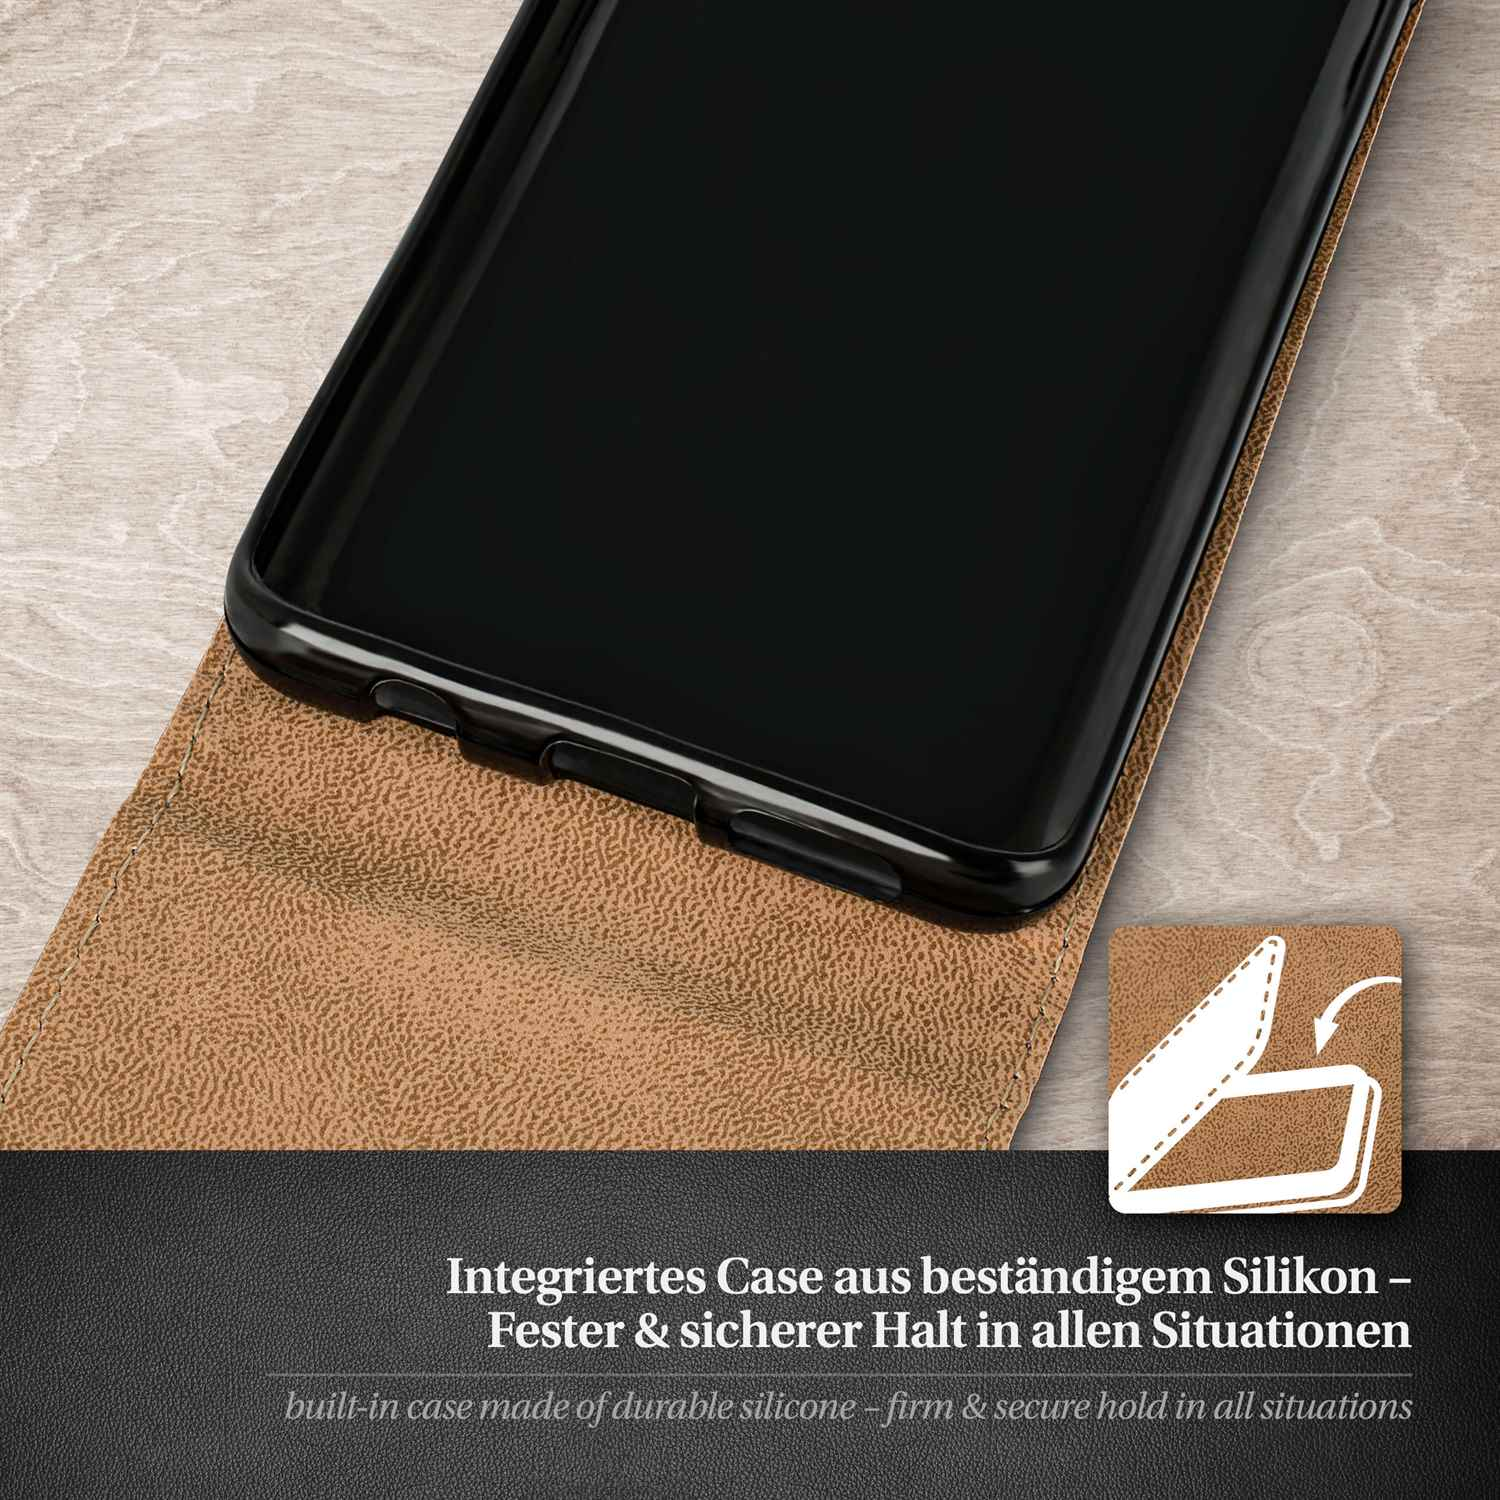 S5 Neo, Indigo-Violet Flip Flip Case, Galaxy Cover, MOEX Samsung,